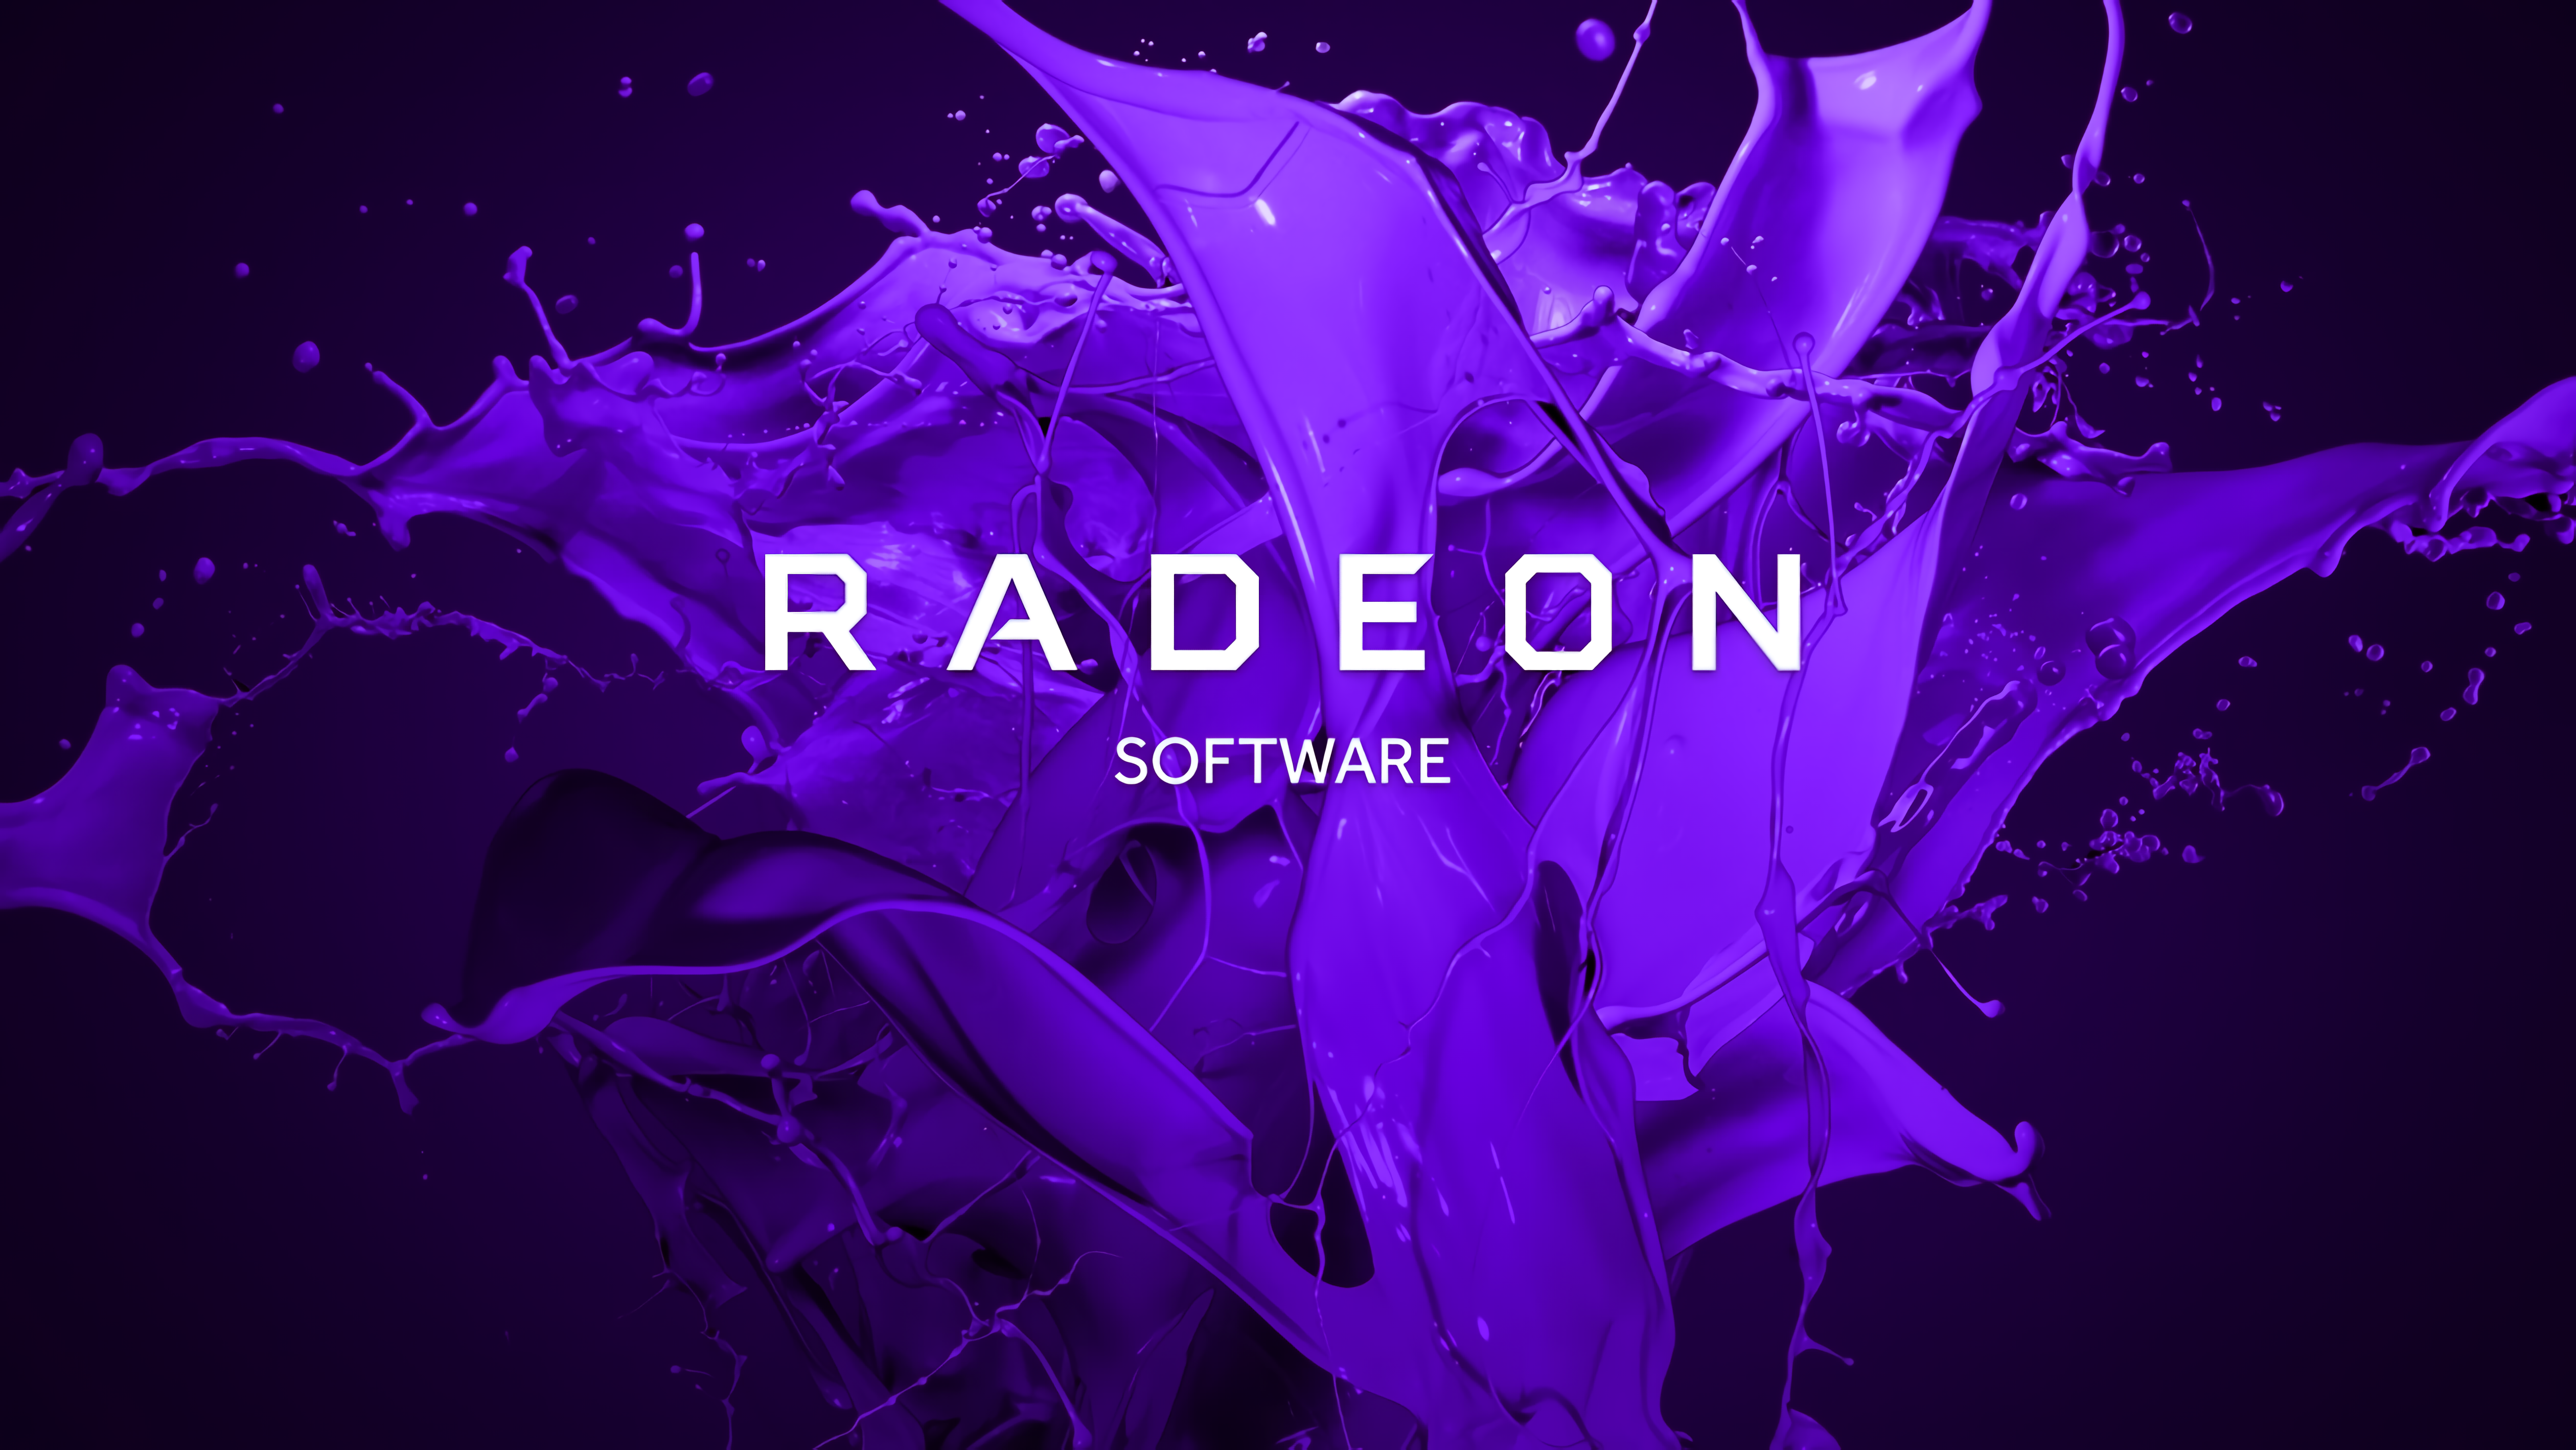 General 5040x2836 AMD Radeon abstract digital art purple background text simple background CGI